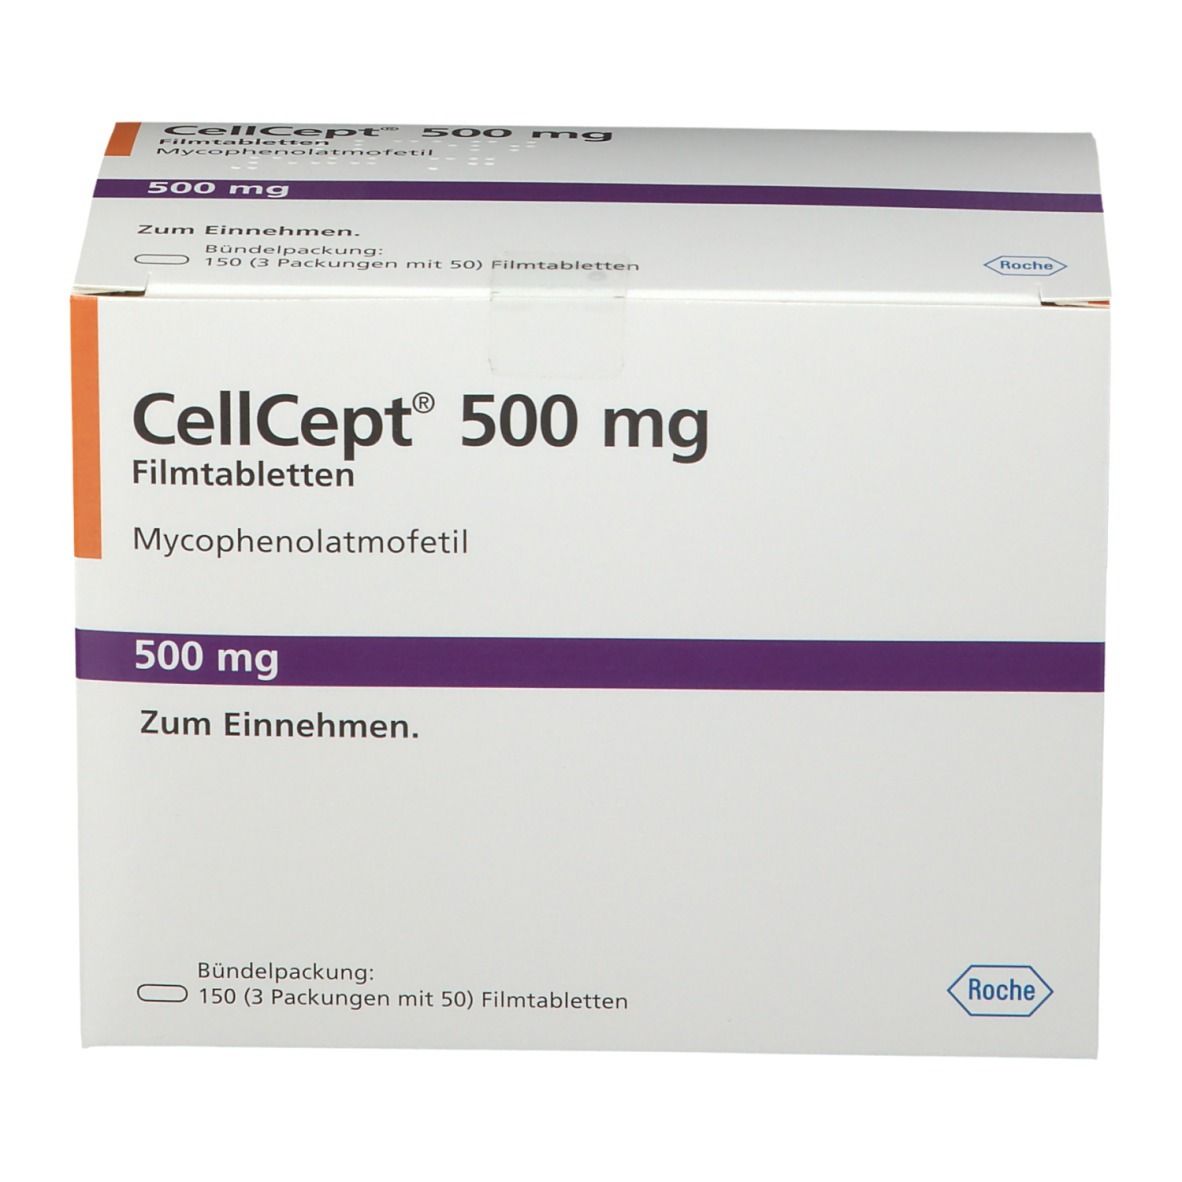 CELLCEPT 500 mg